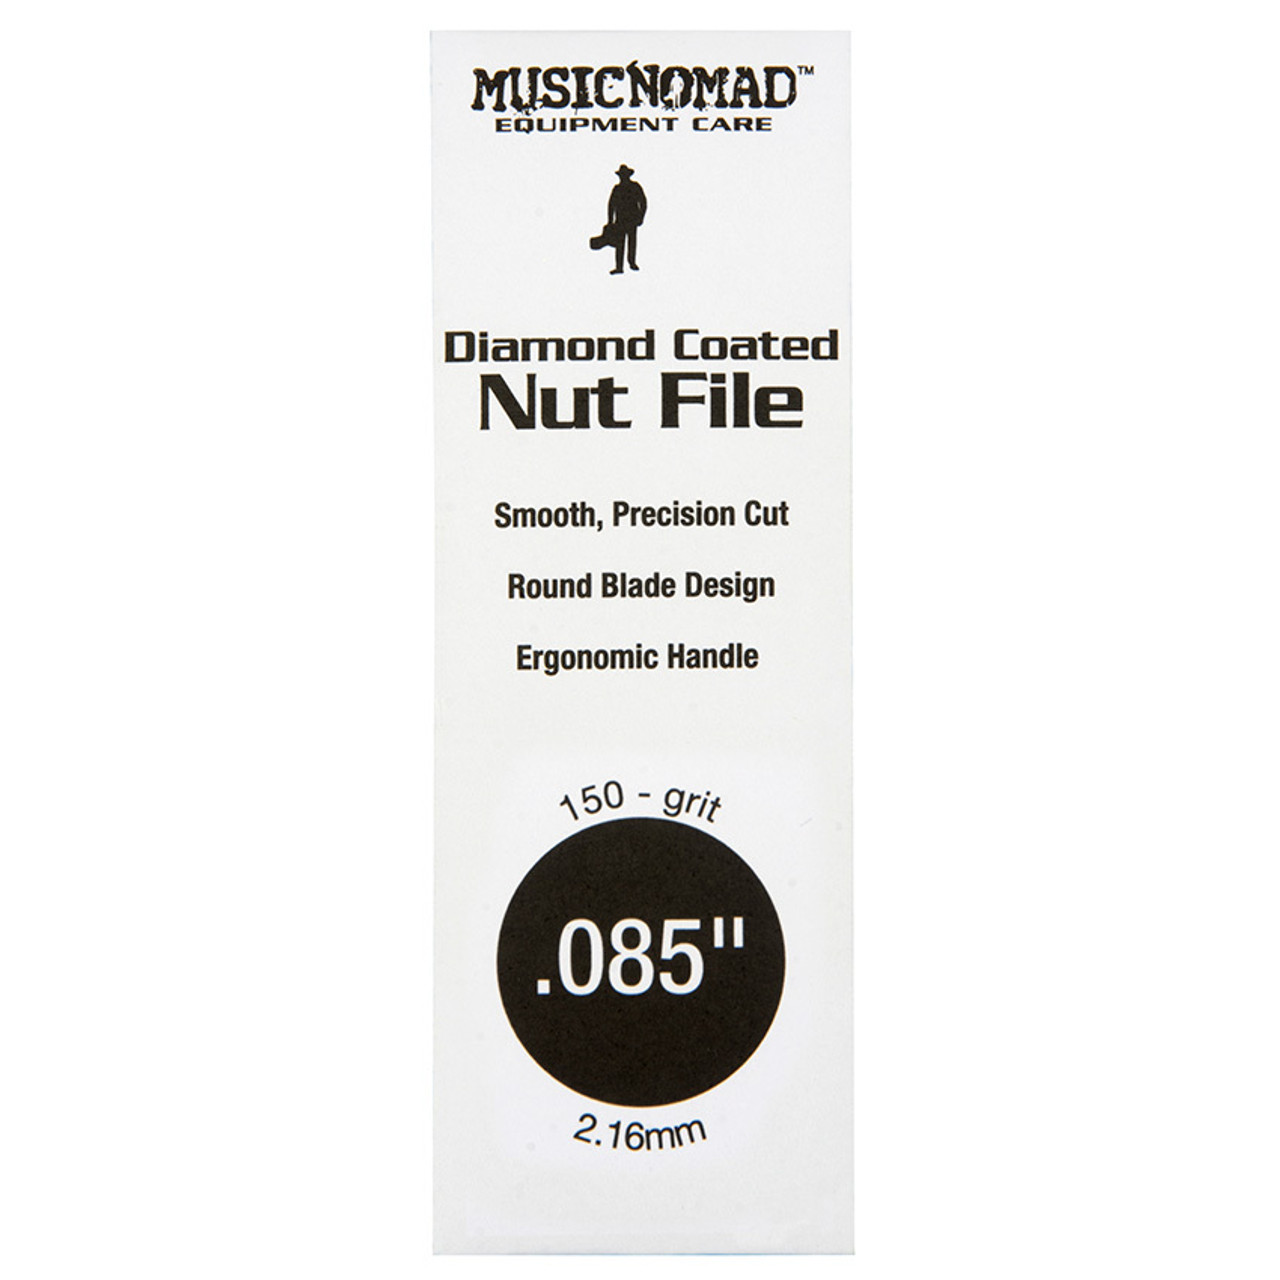 Music Nomad Diamond Coated 085" Nut File (1-Pce)